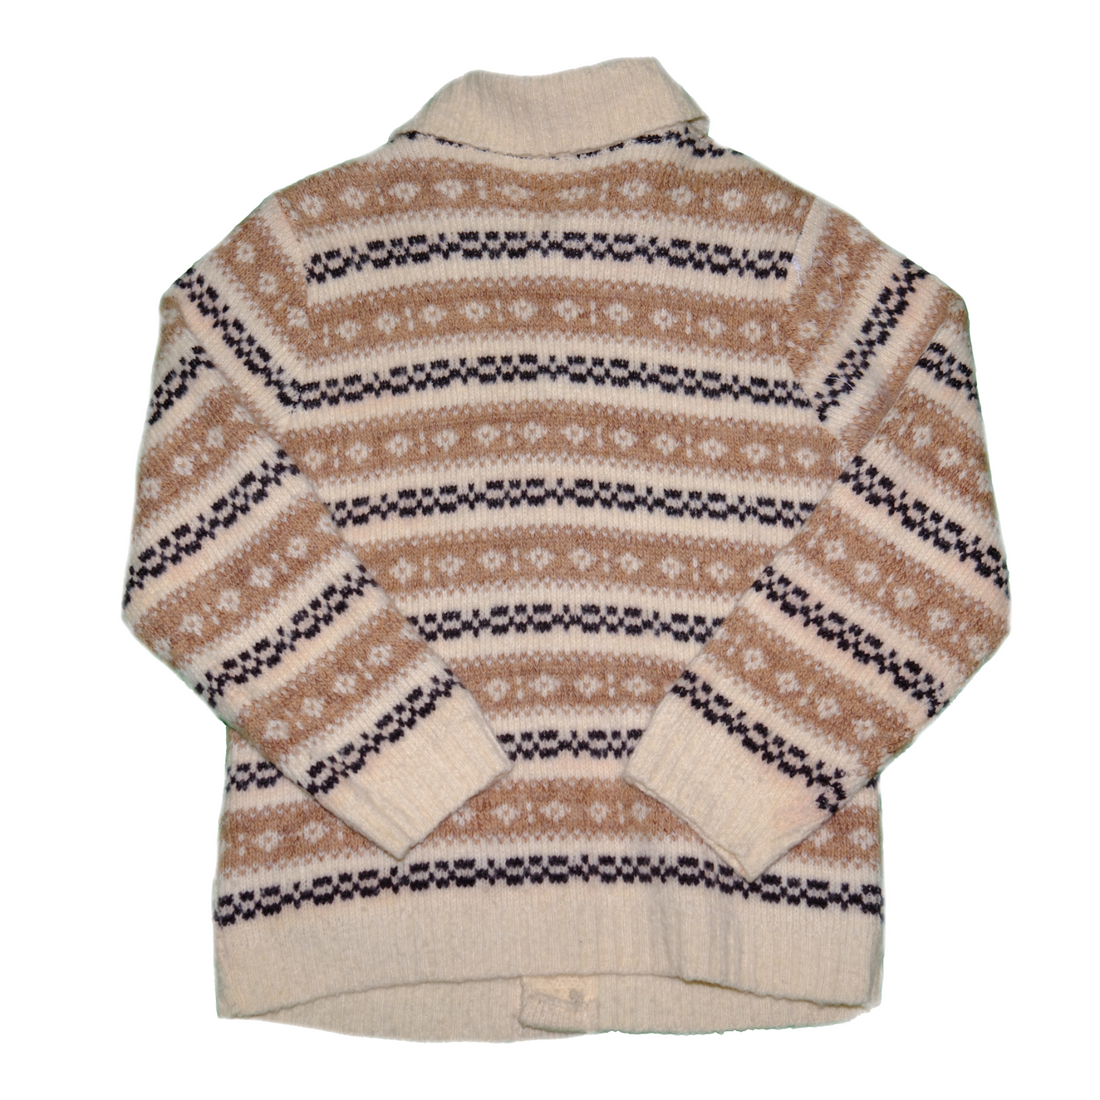 Vintage Tundra Wool Knit Cardigan Sweater Size Medium Fair Isle